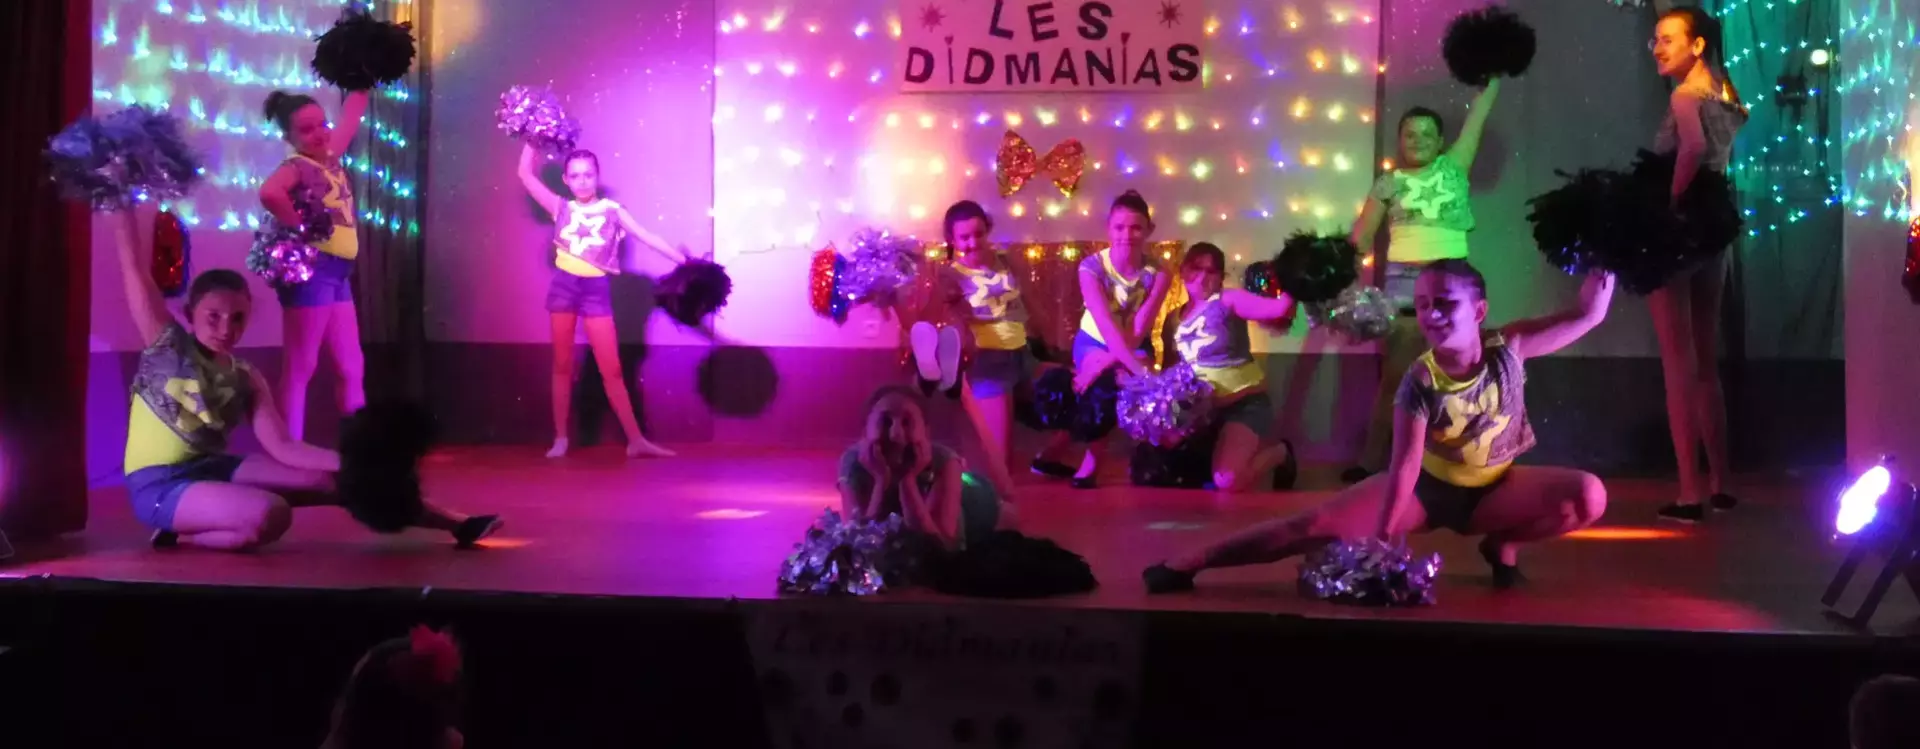 Les Didmanias associations de danse, pompom girls (15) Cantal